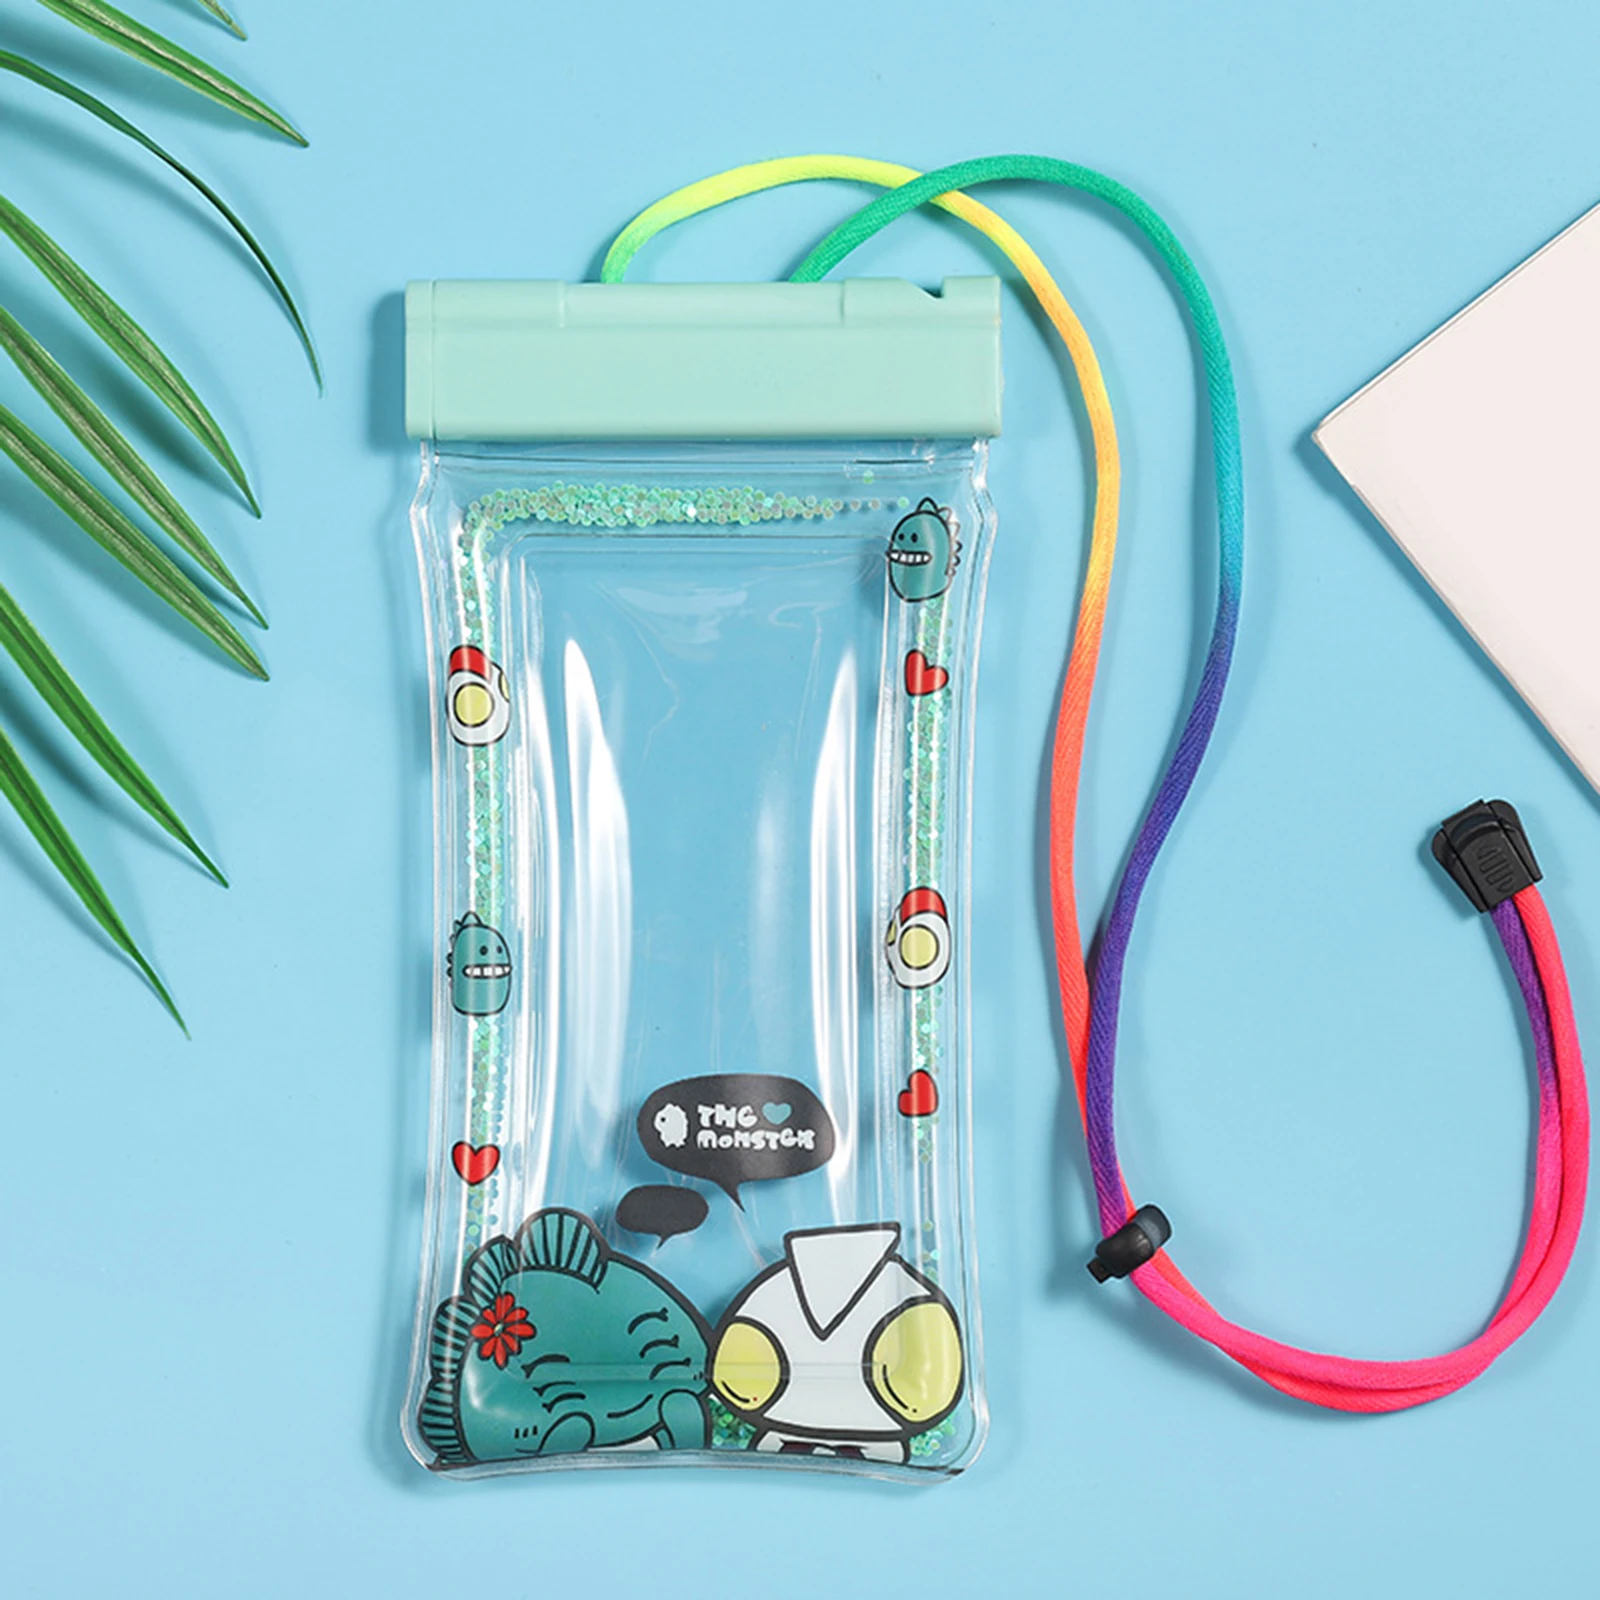 21x11.5cm PVC Waterproof Phone Case Surfing Dry Bag PX8 Underwater Holder